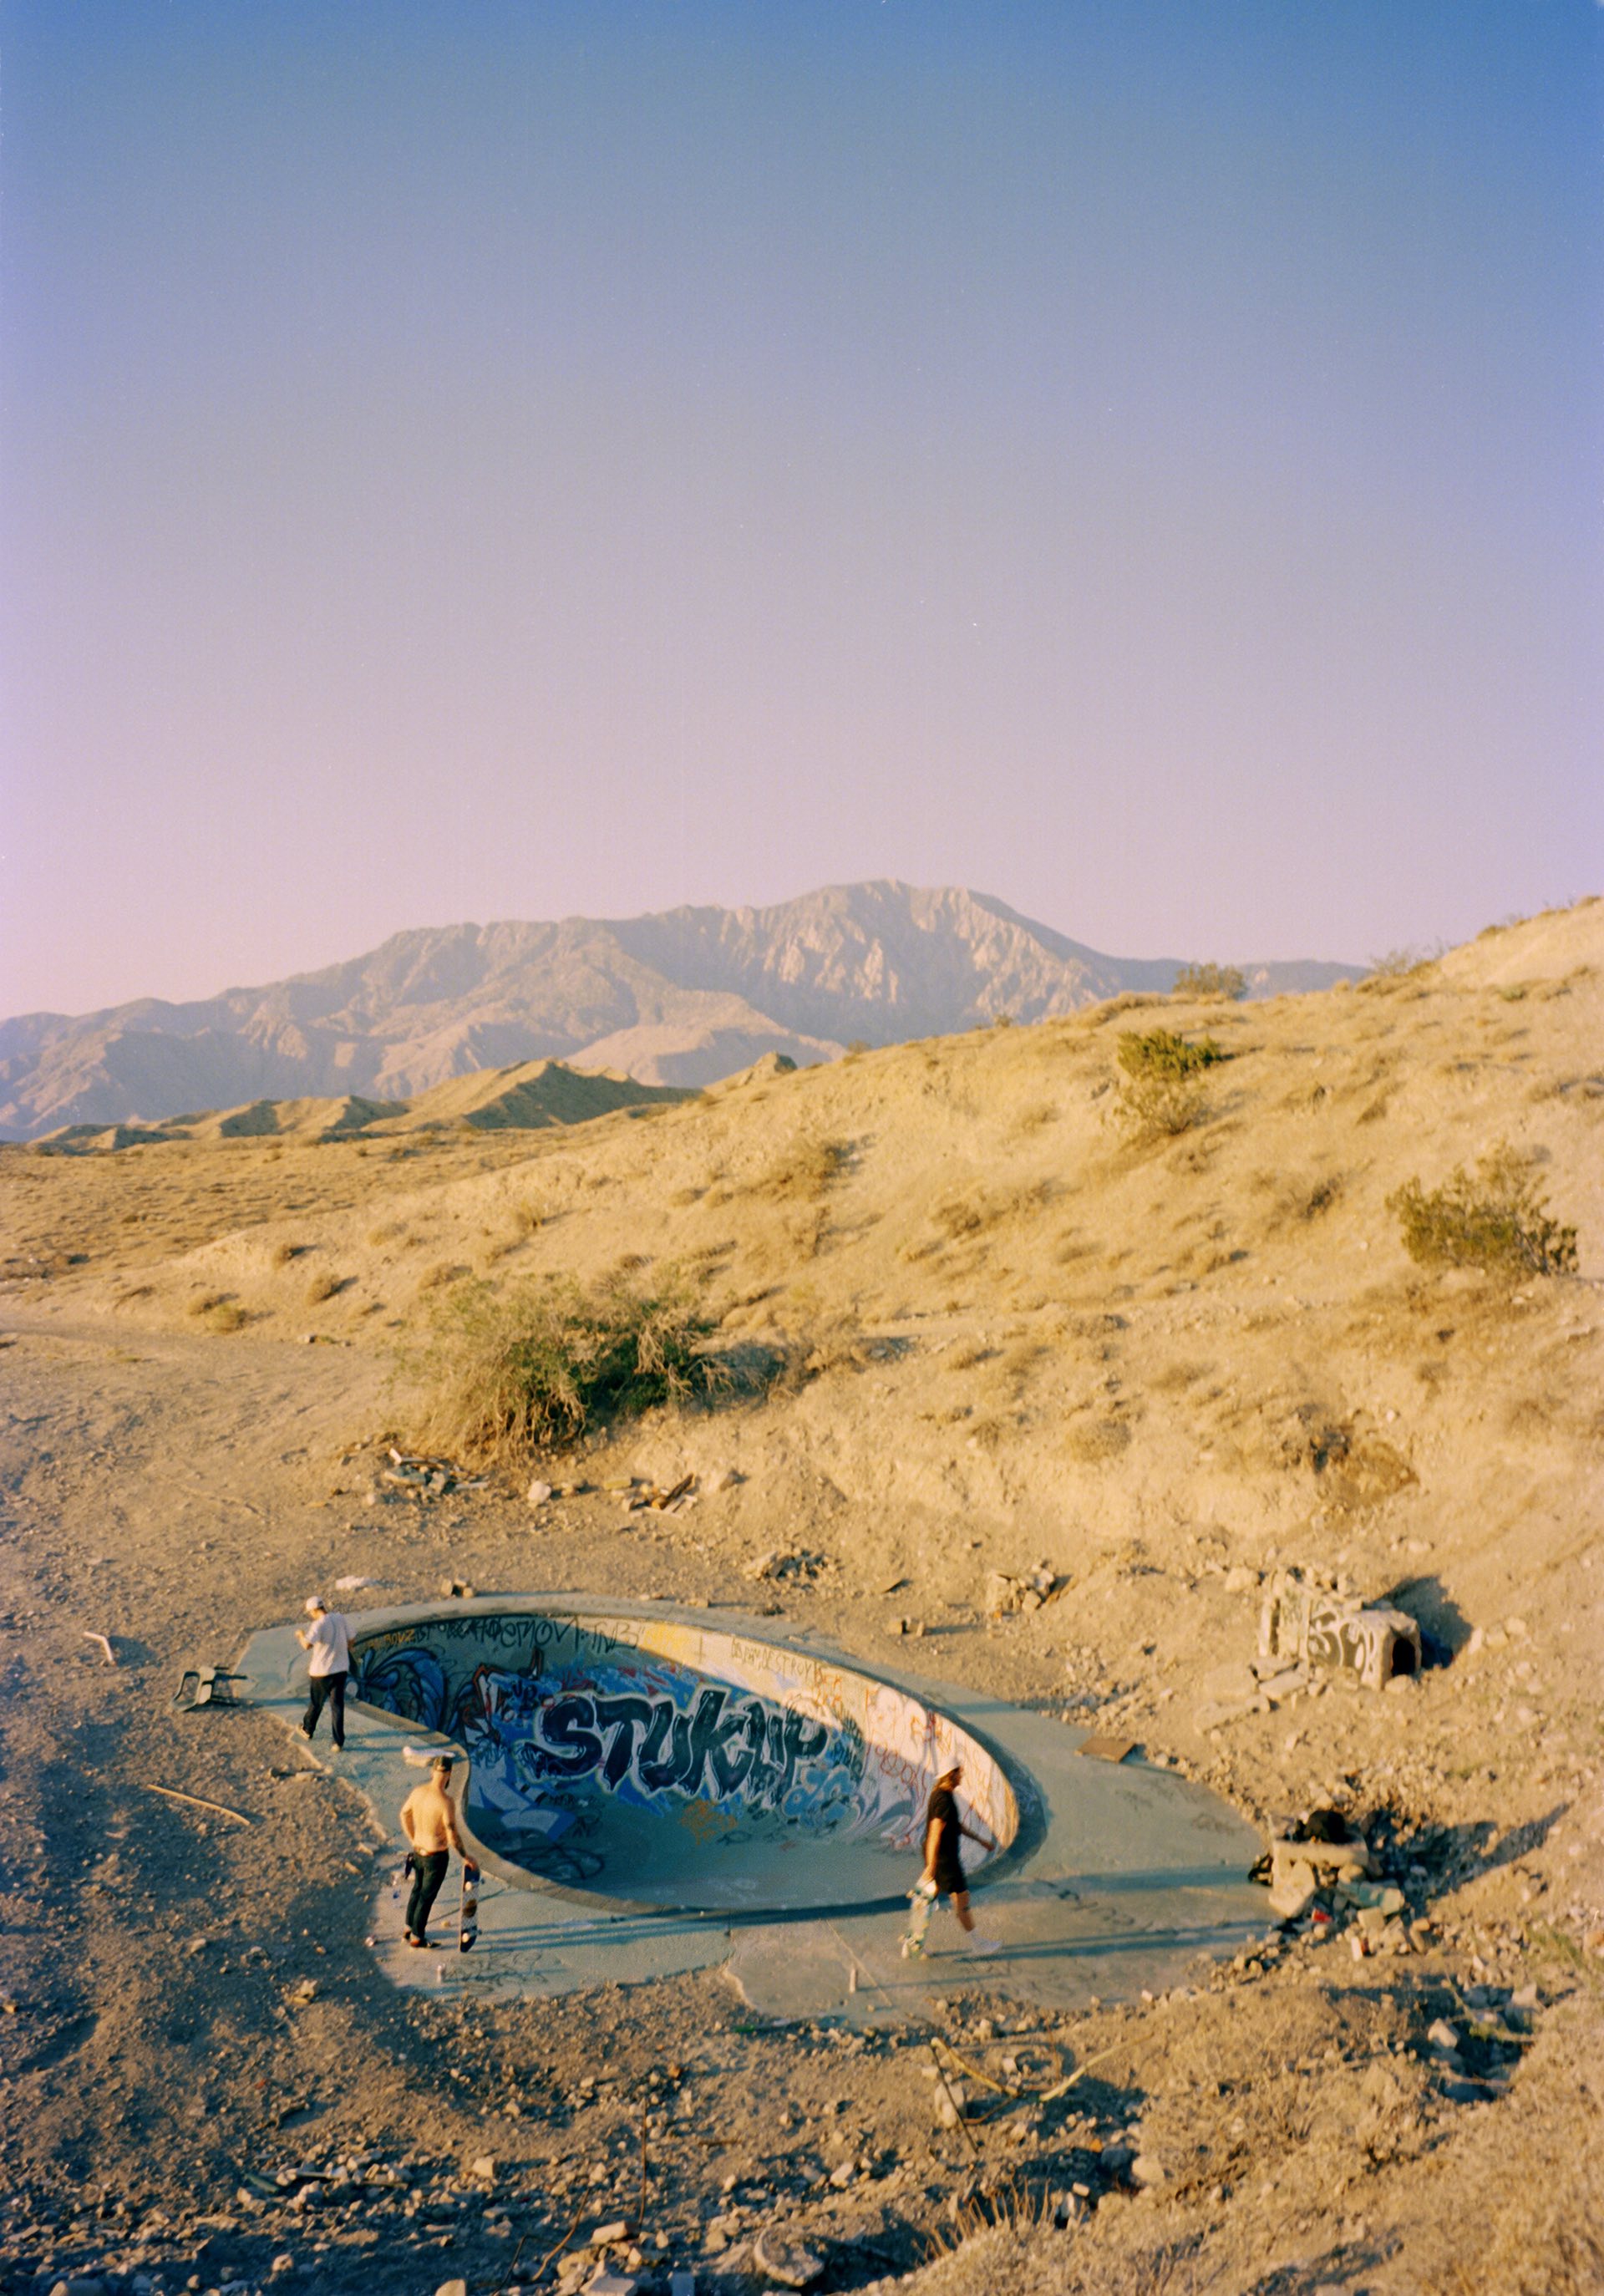 skateboardswimmingpoolcalifornia2